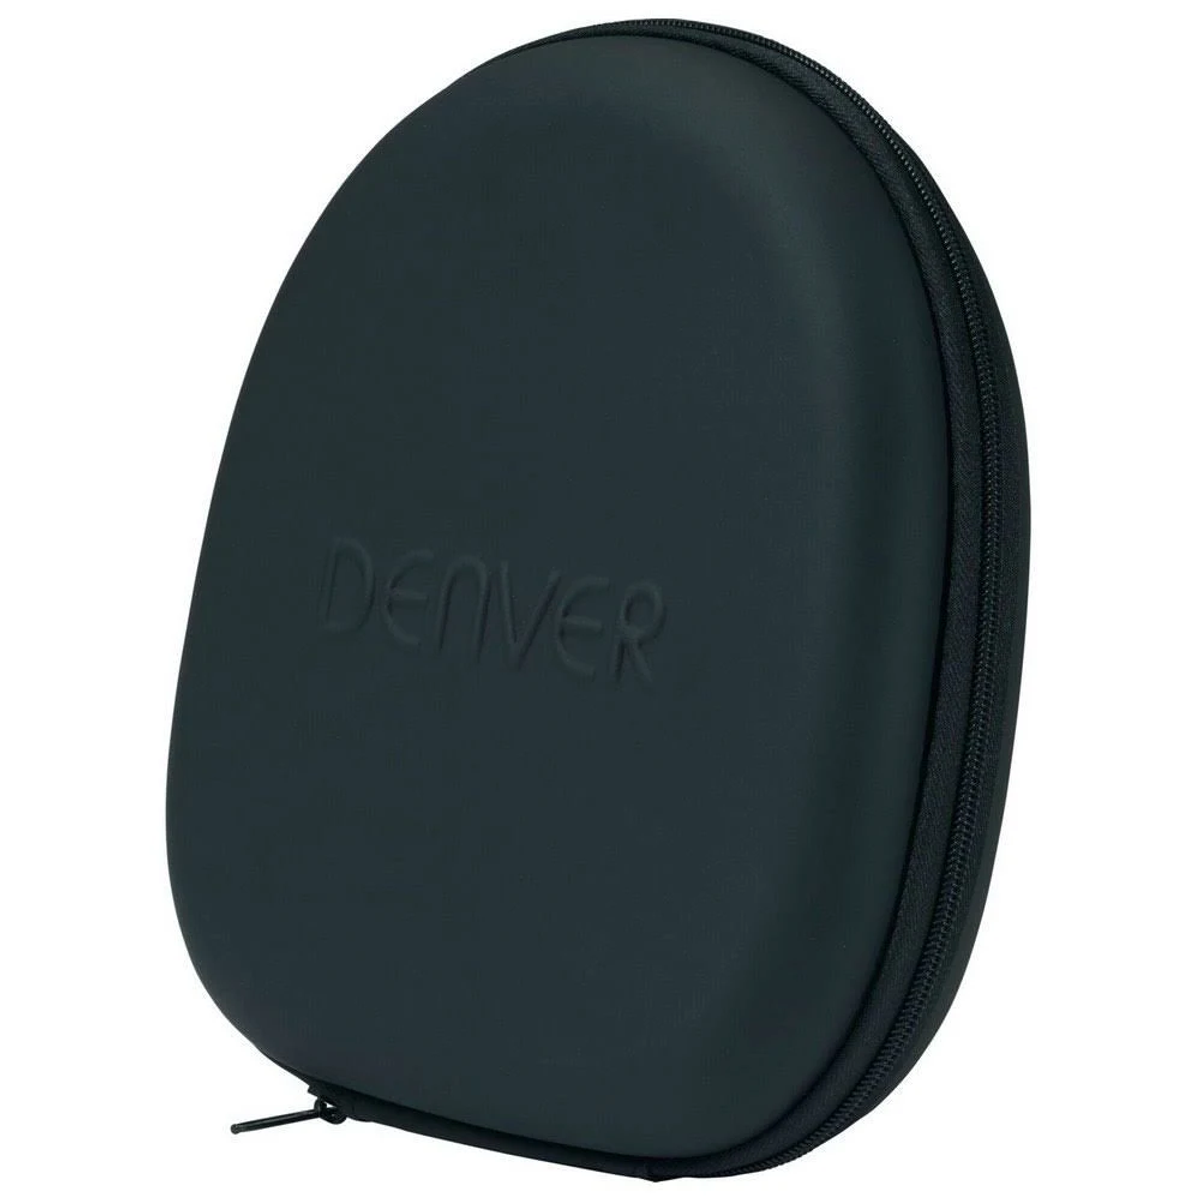 DENVER ELECTRONICS BTN207SILVER, Kopfhörer Bluetooth Creme Bluetooth Over-ear